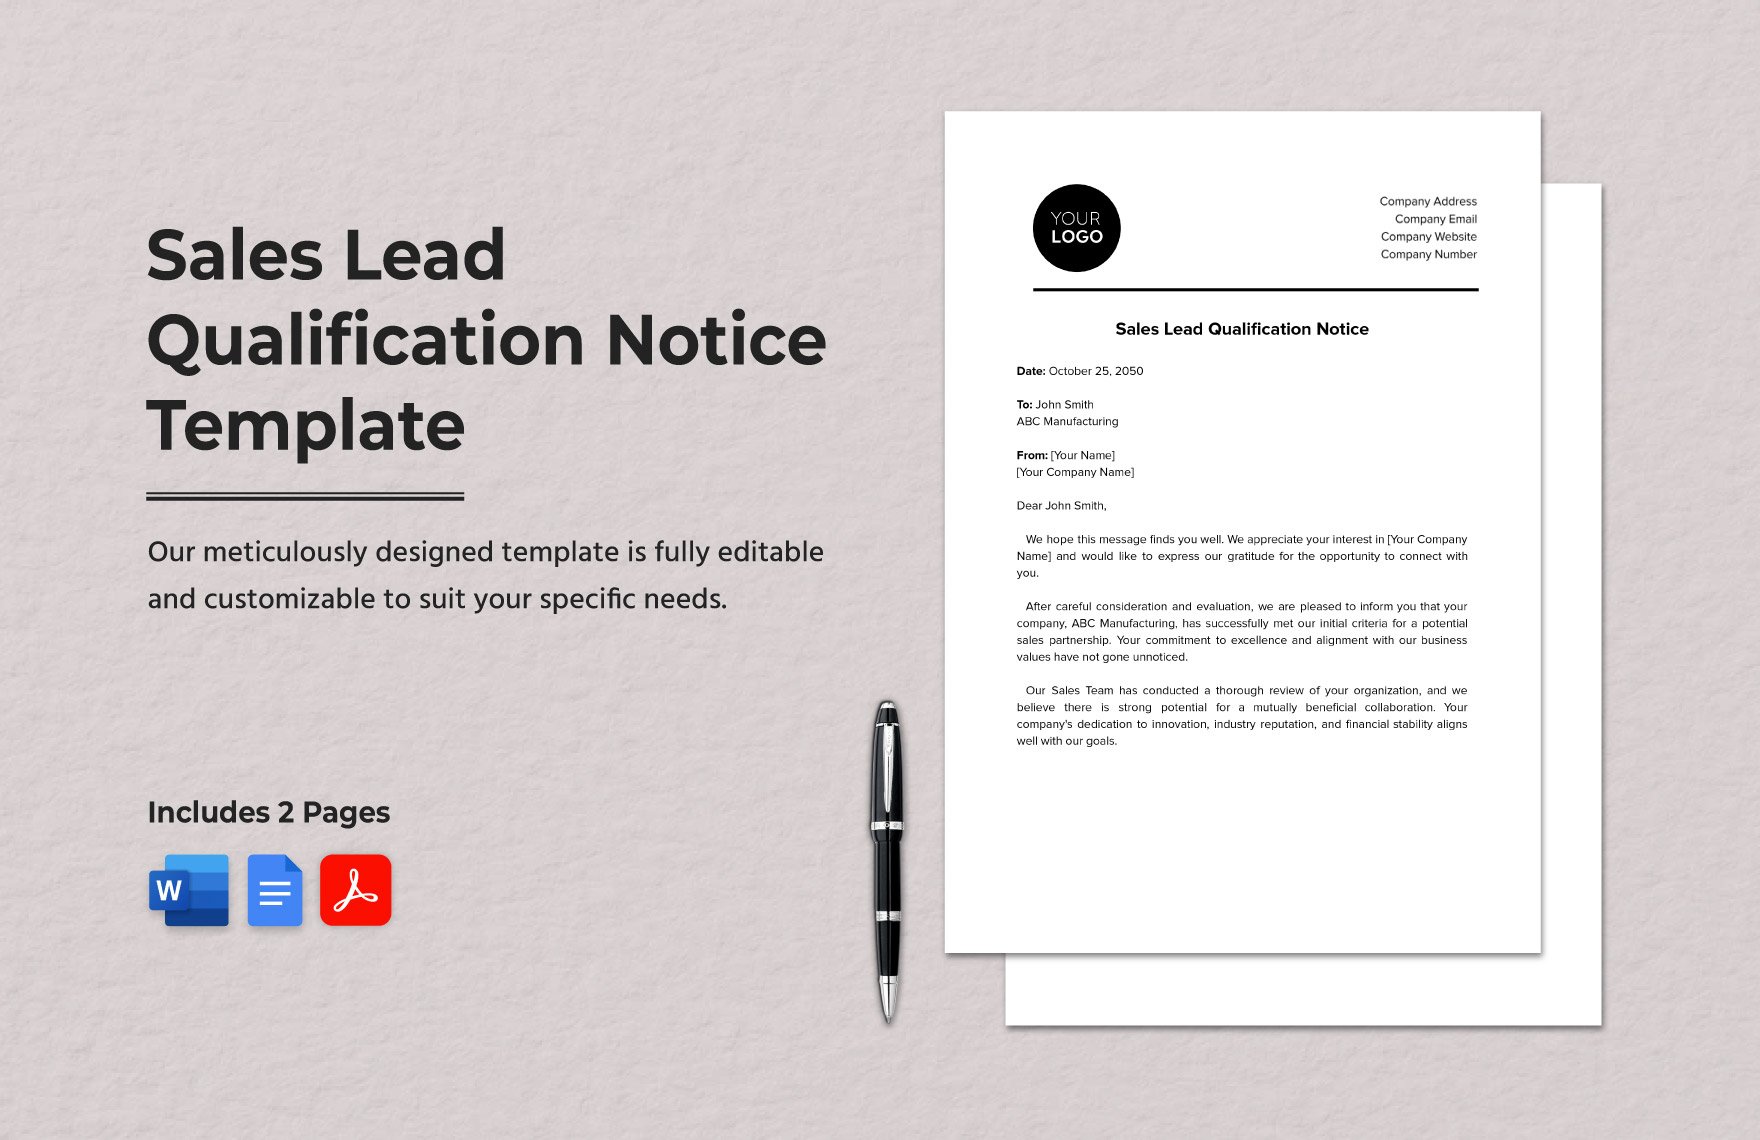 Sales Lead Qualification Notice Template